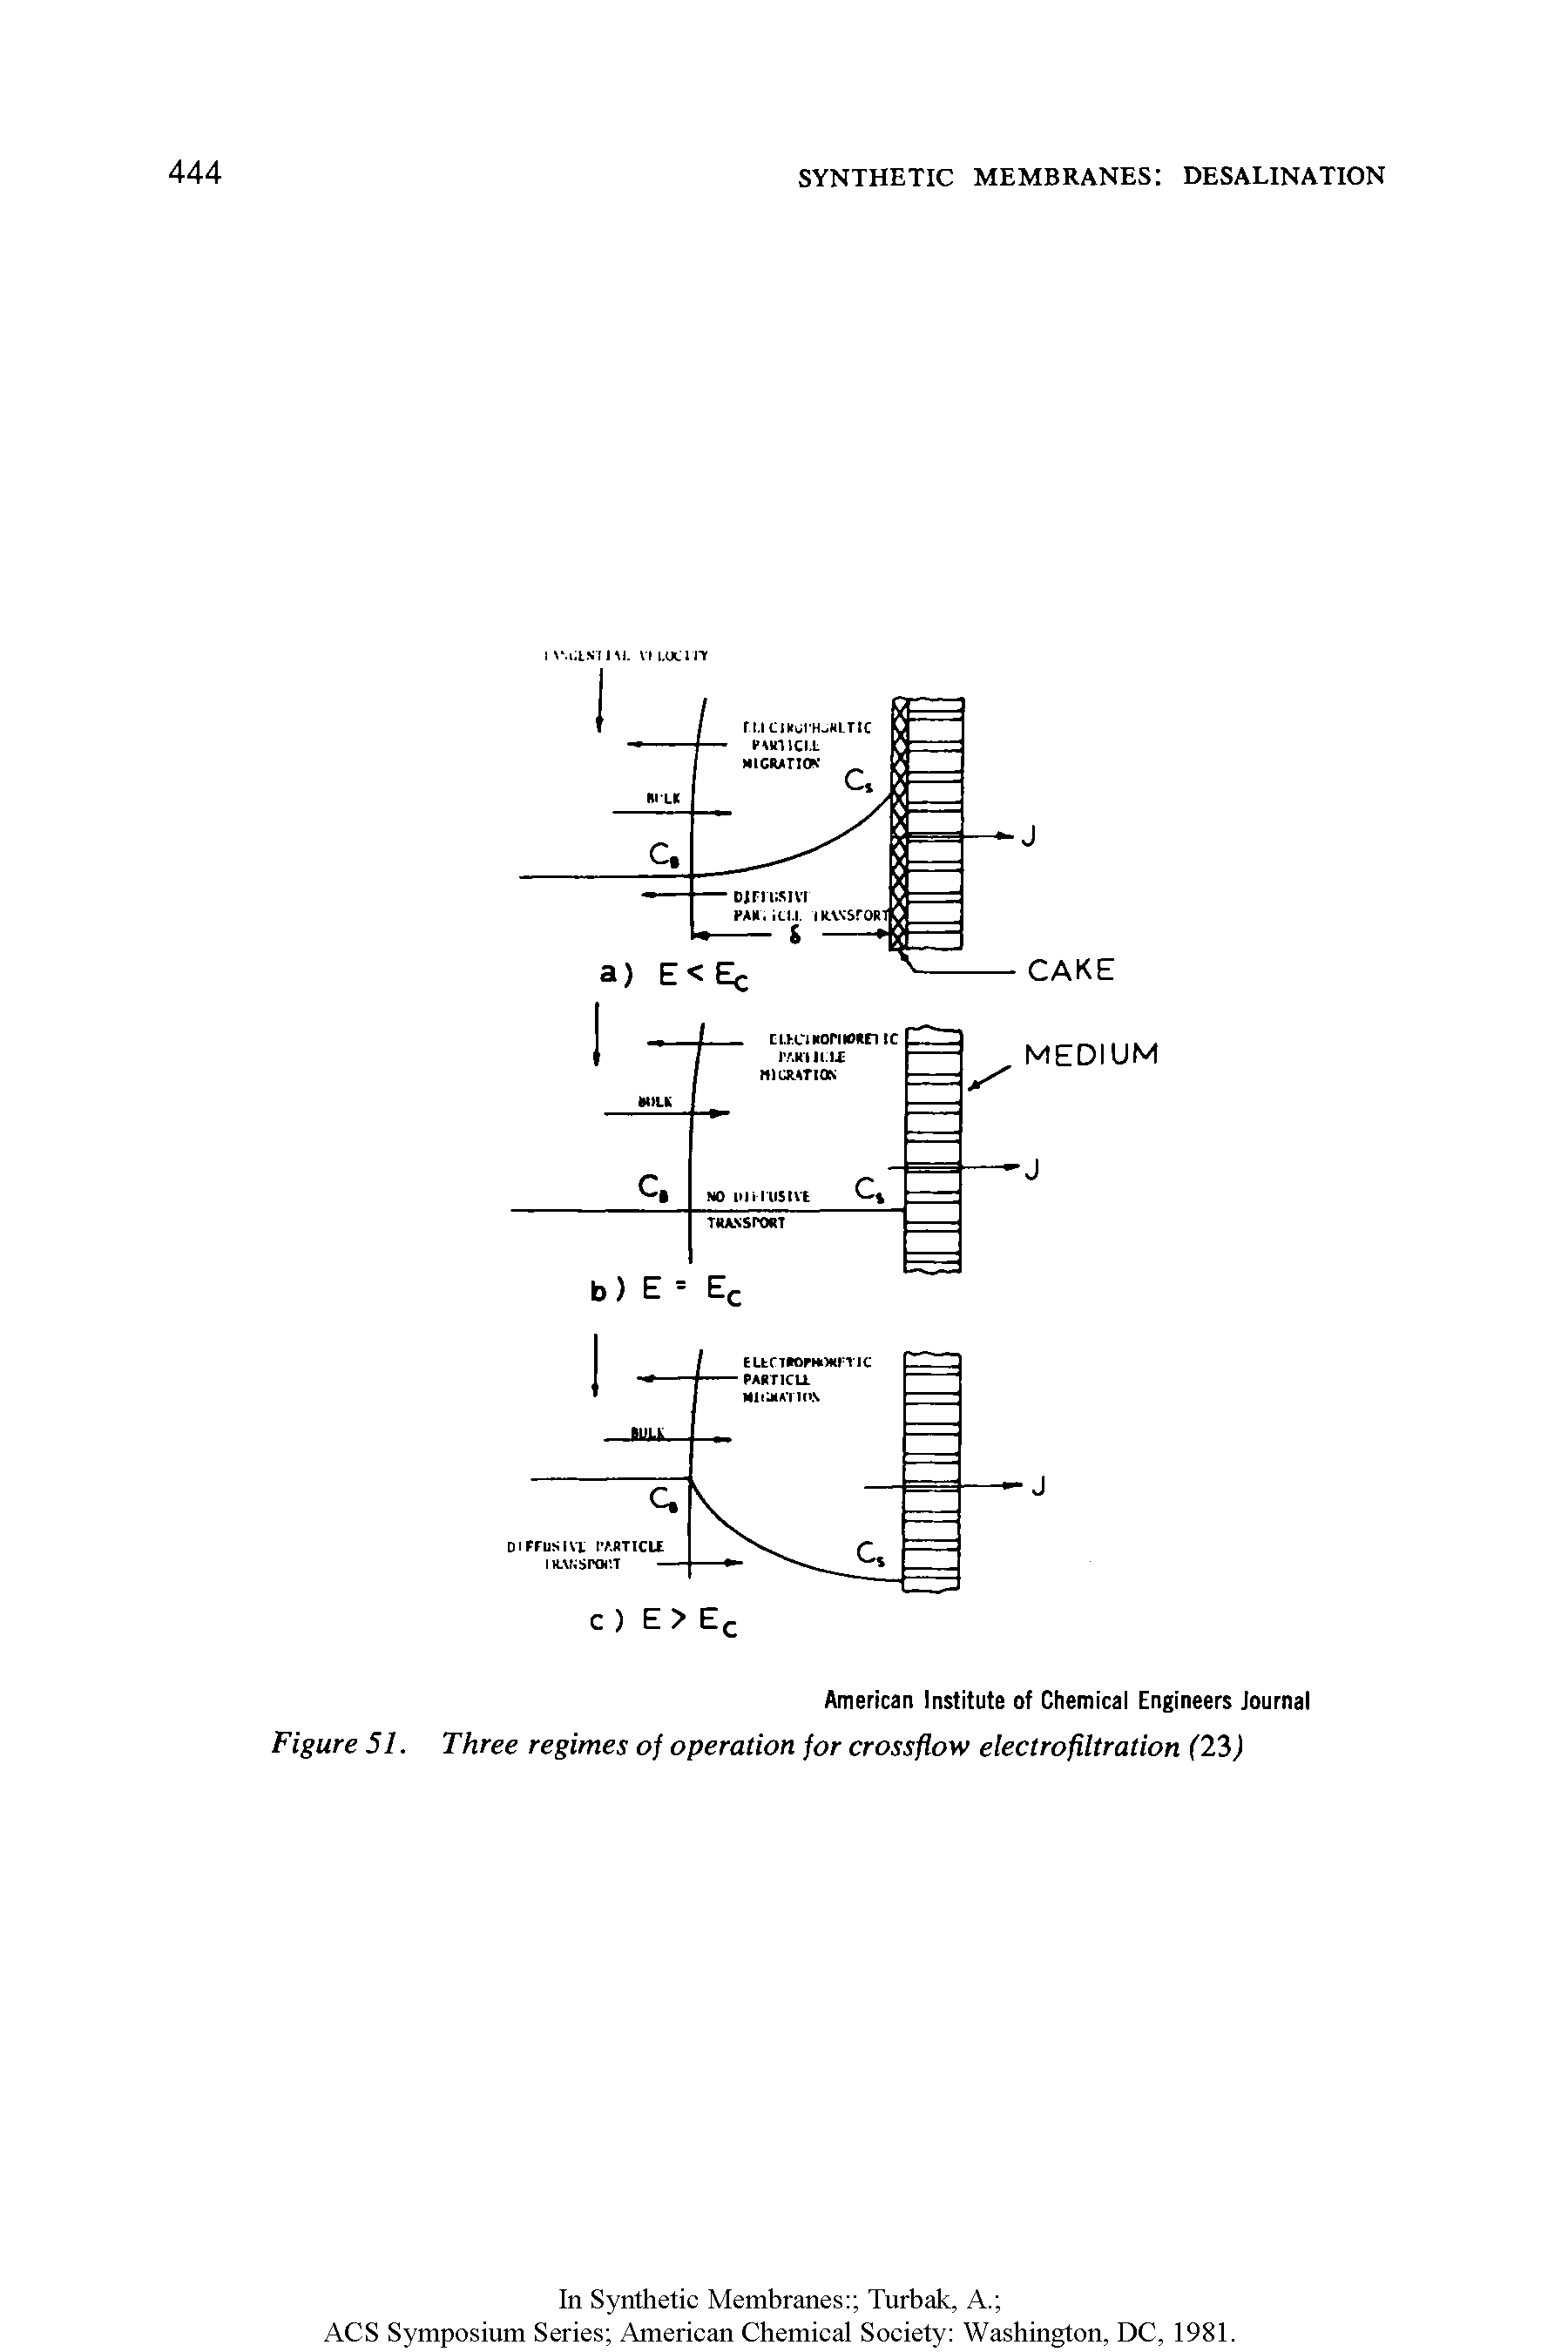 Figure 51. Three regimes of operation for crossflow electrofiltration (23)...